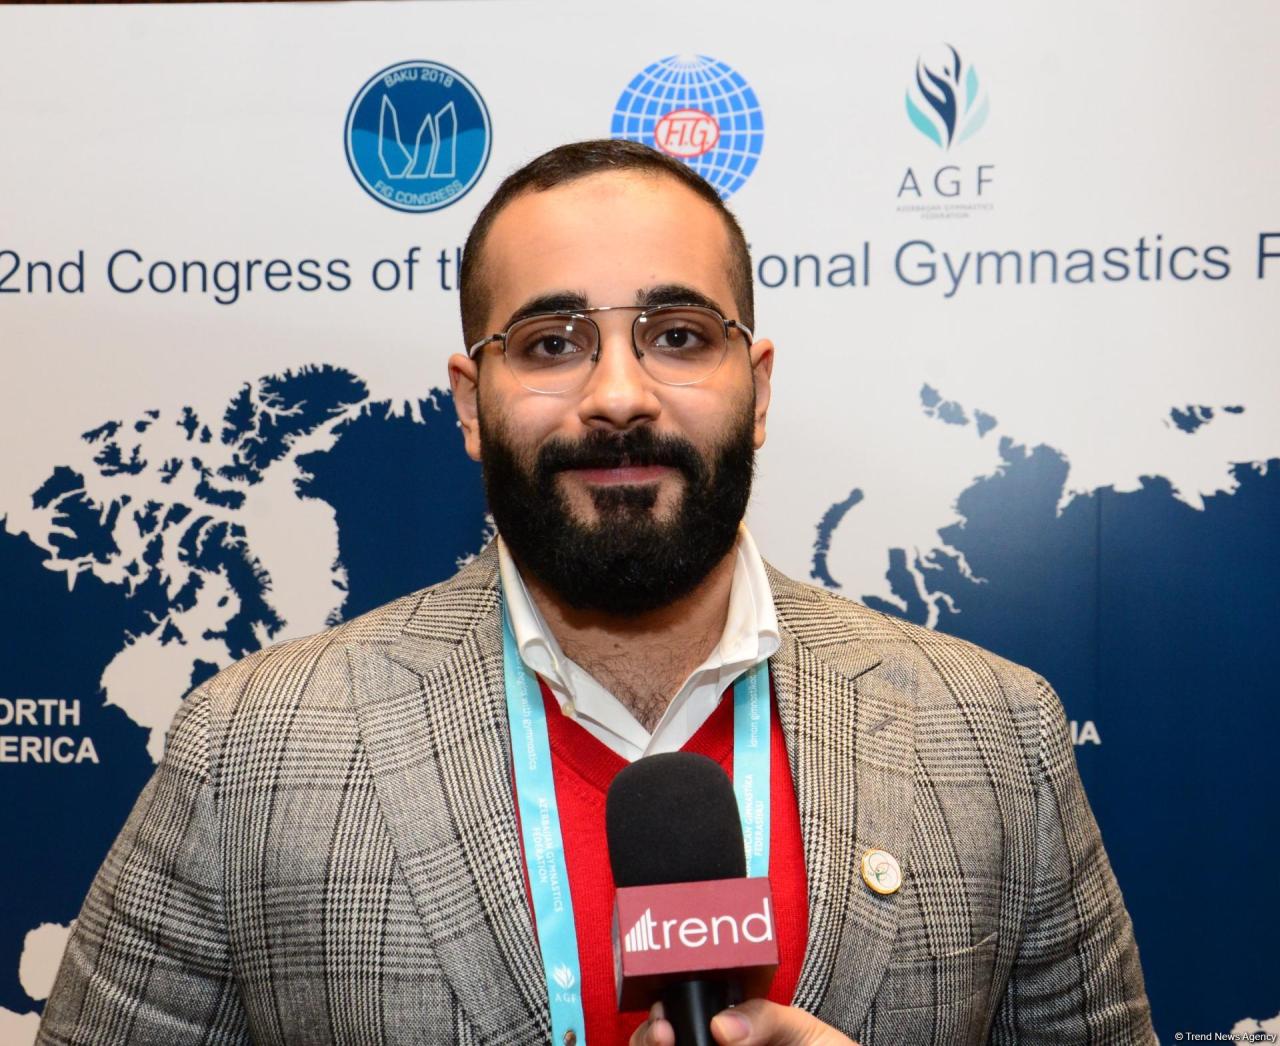 “Azerbaijan Gymnastics Federation one of world’s strongest federations”